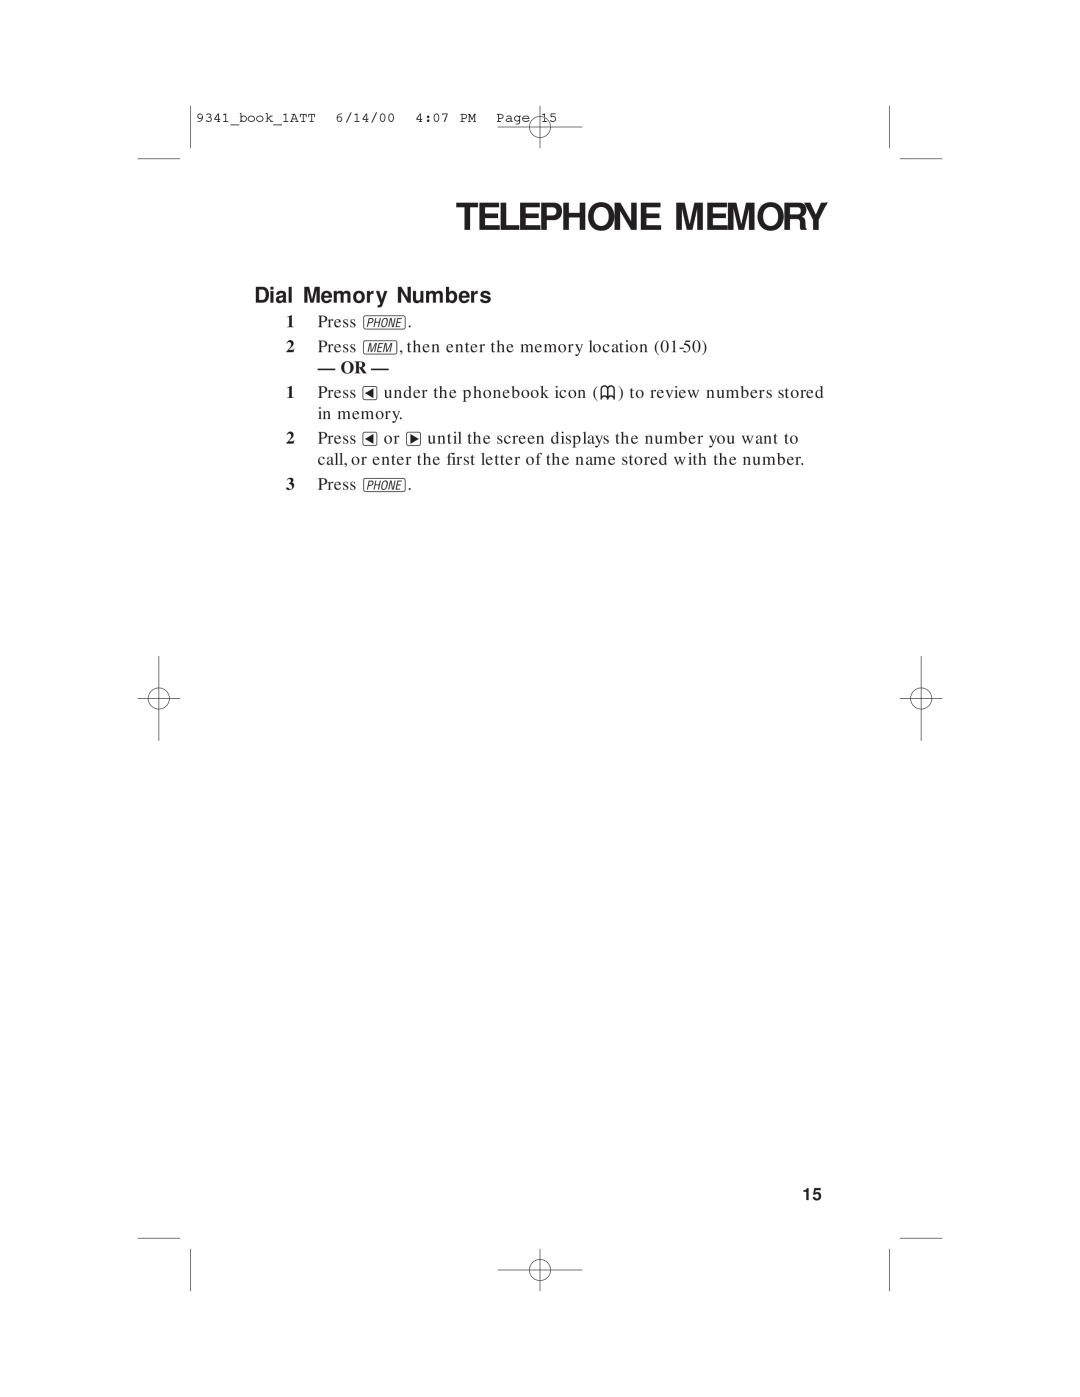 AT&T 9341 user manual Dial Memory Numbers, Telephone Memory, Press P 2 Press M, then enter the memory location 